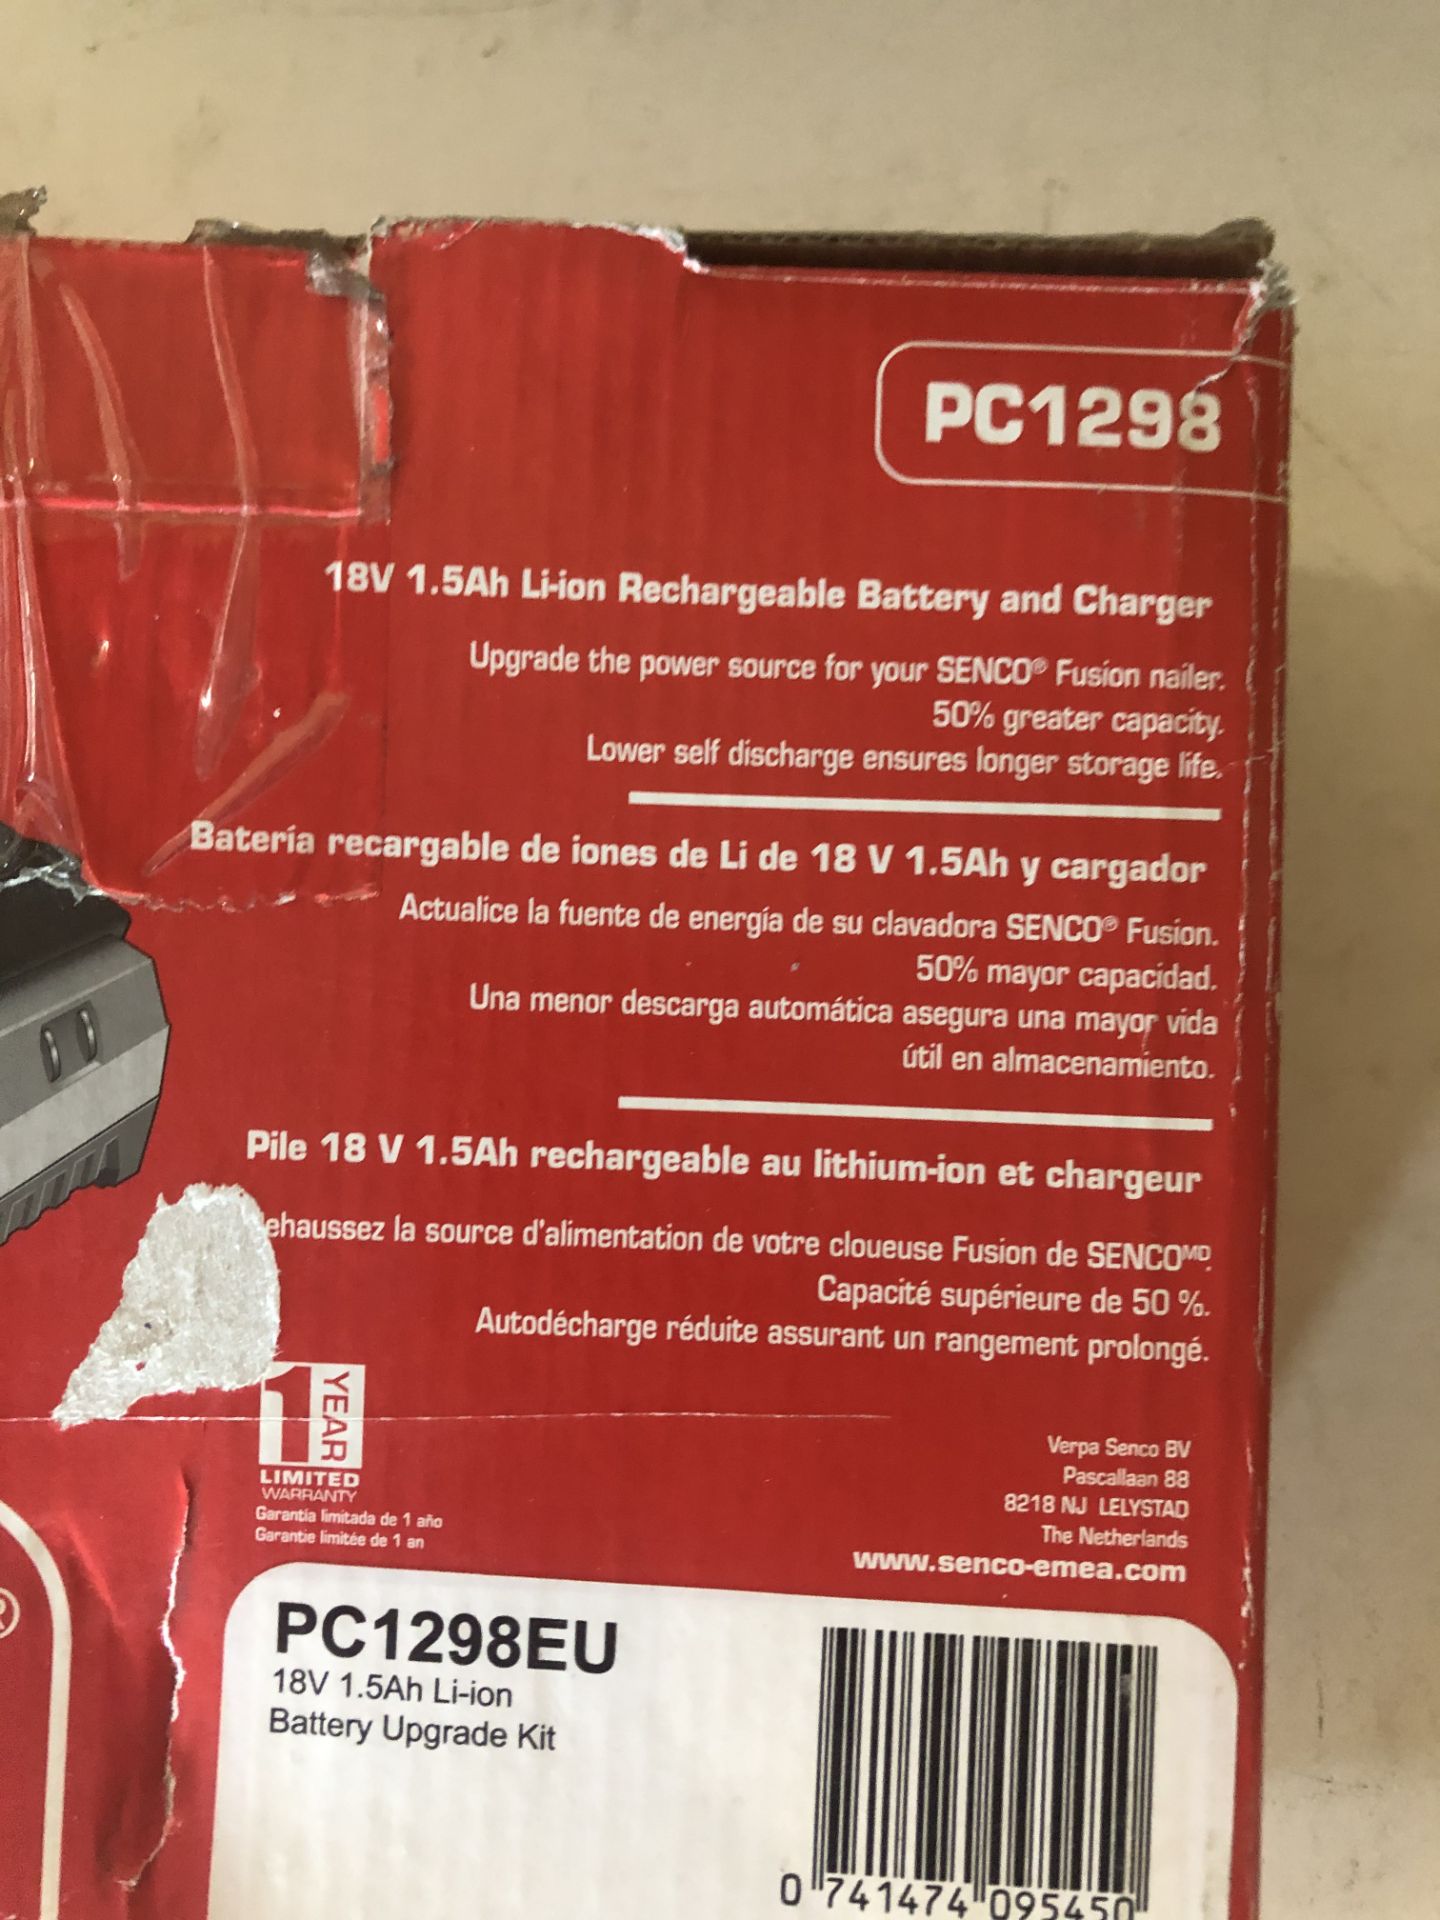 Senco Fusion 18v 1.5Ah Battery and Charger Upgrade Kit - Image 2 of 2